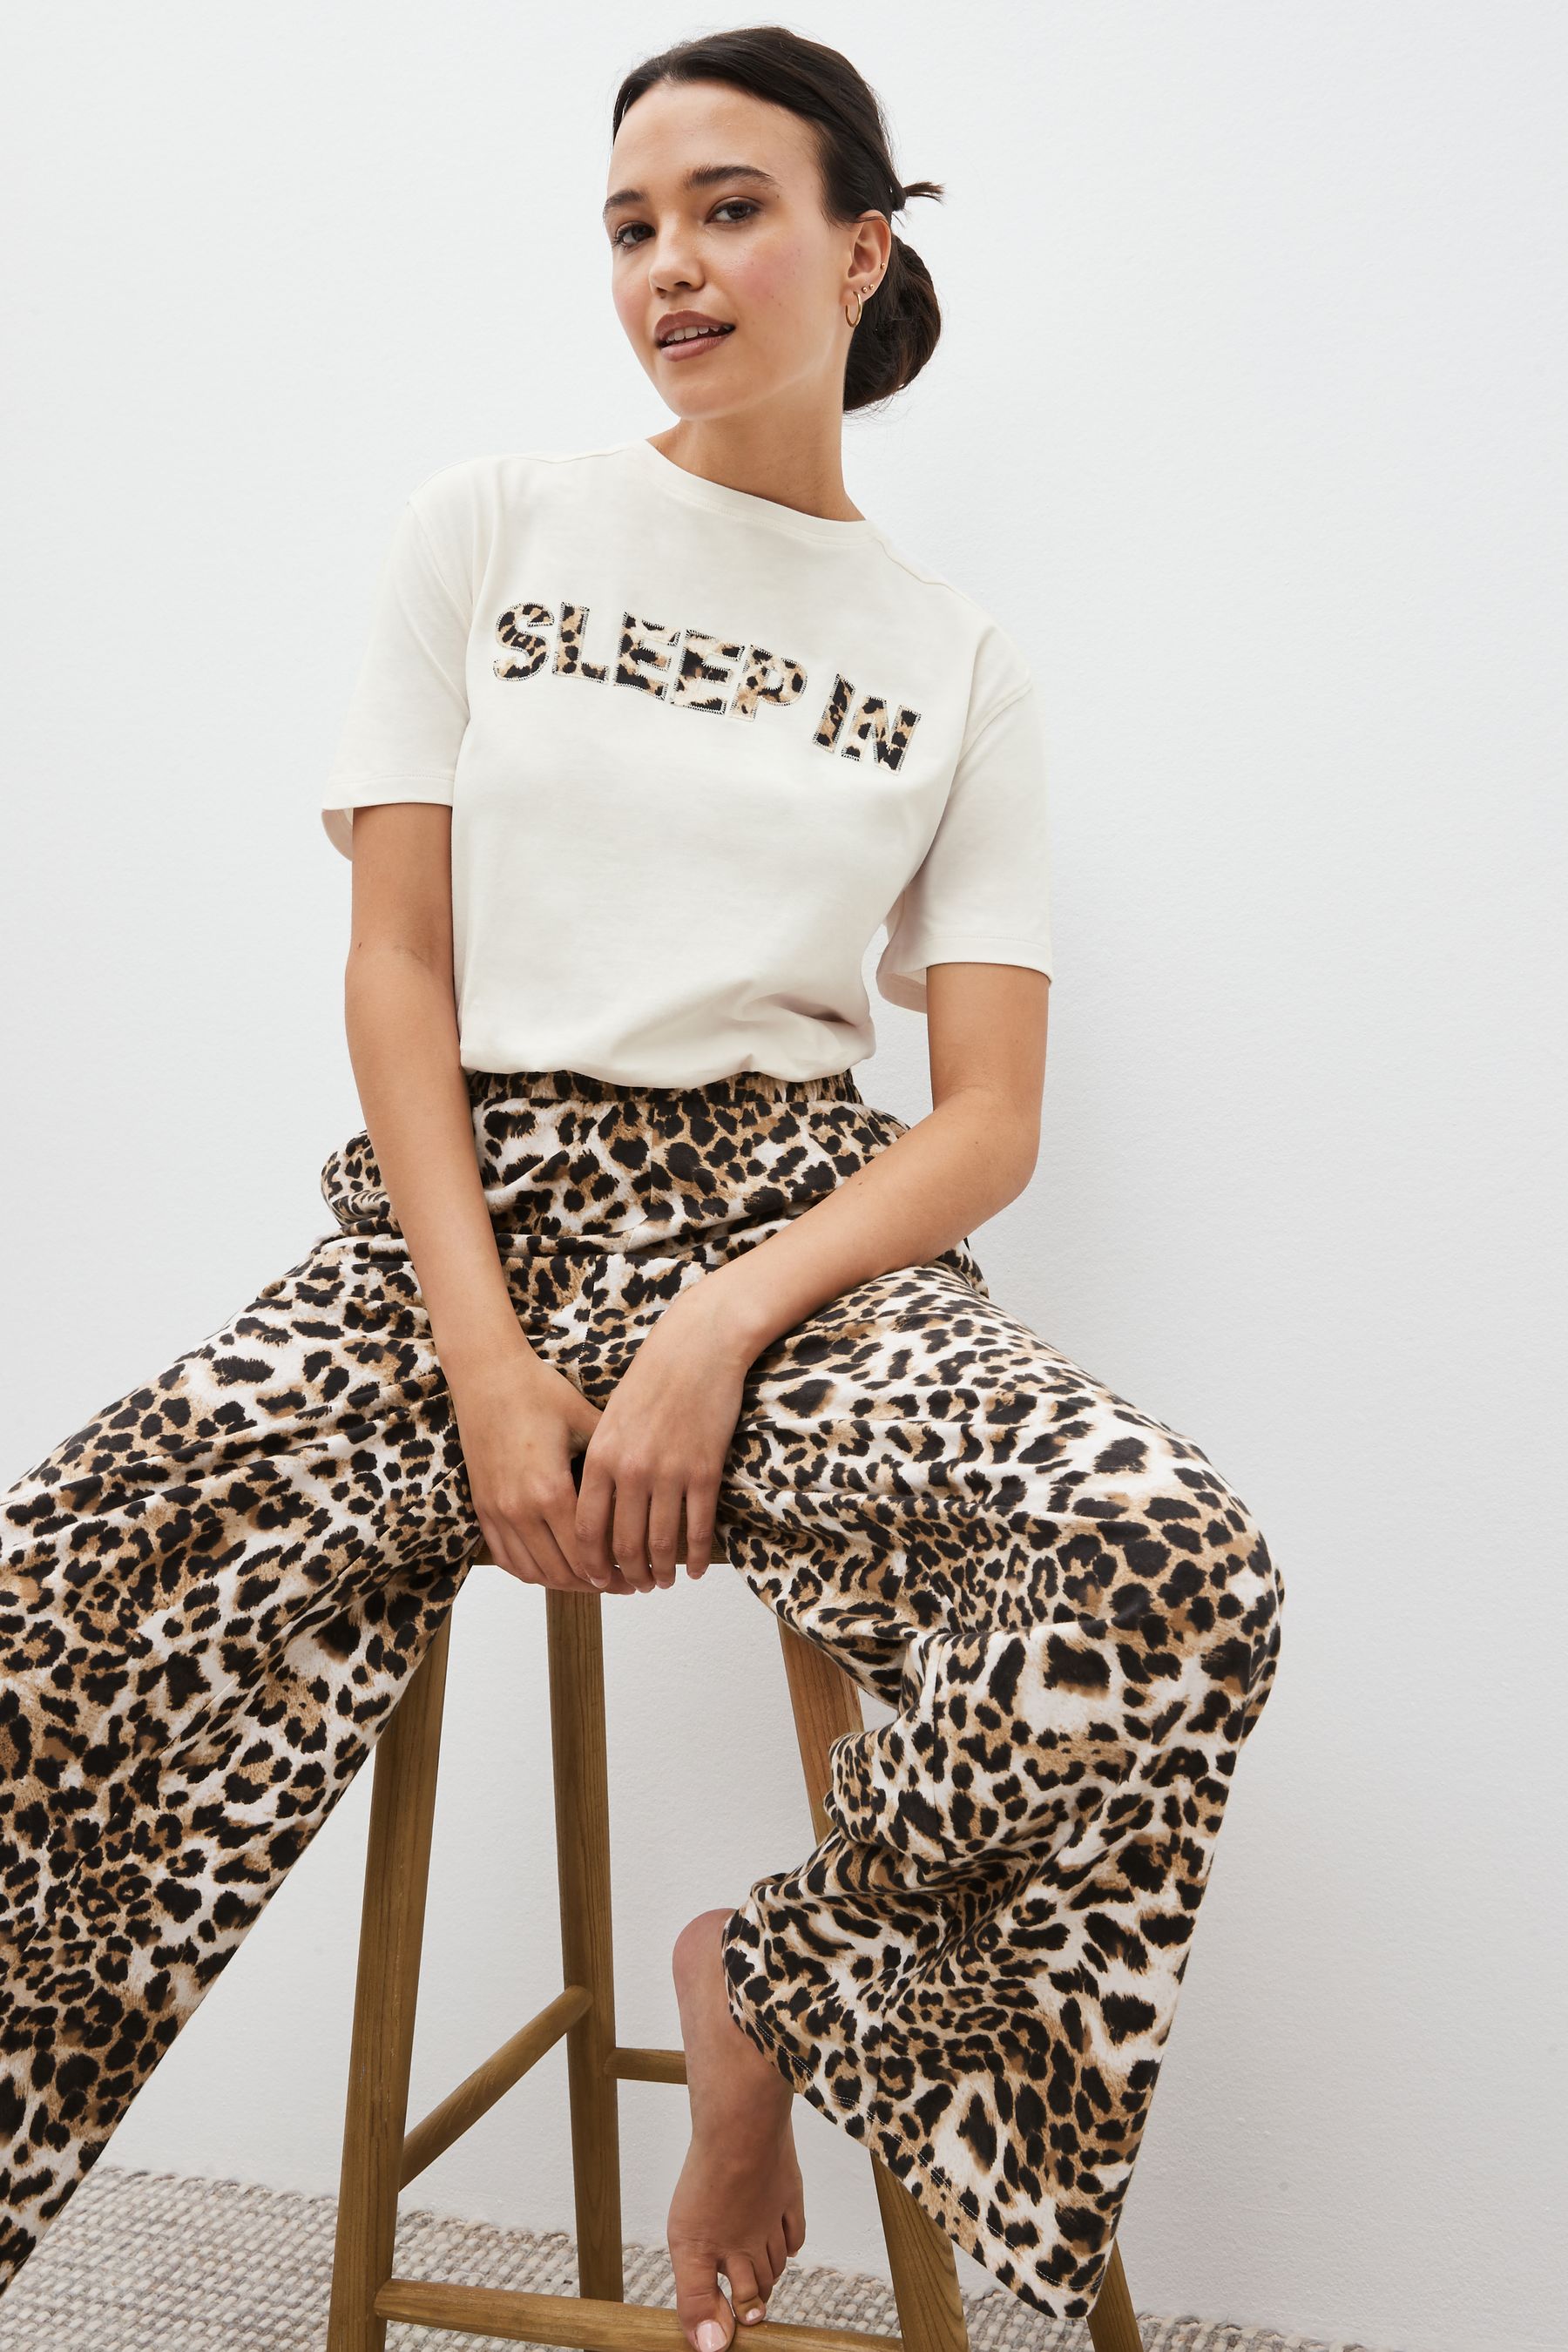 Quince + 100% European Linen Shorts Pajama Set